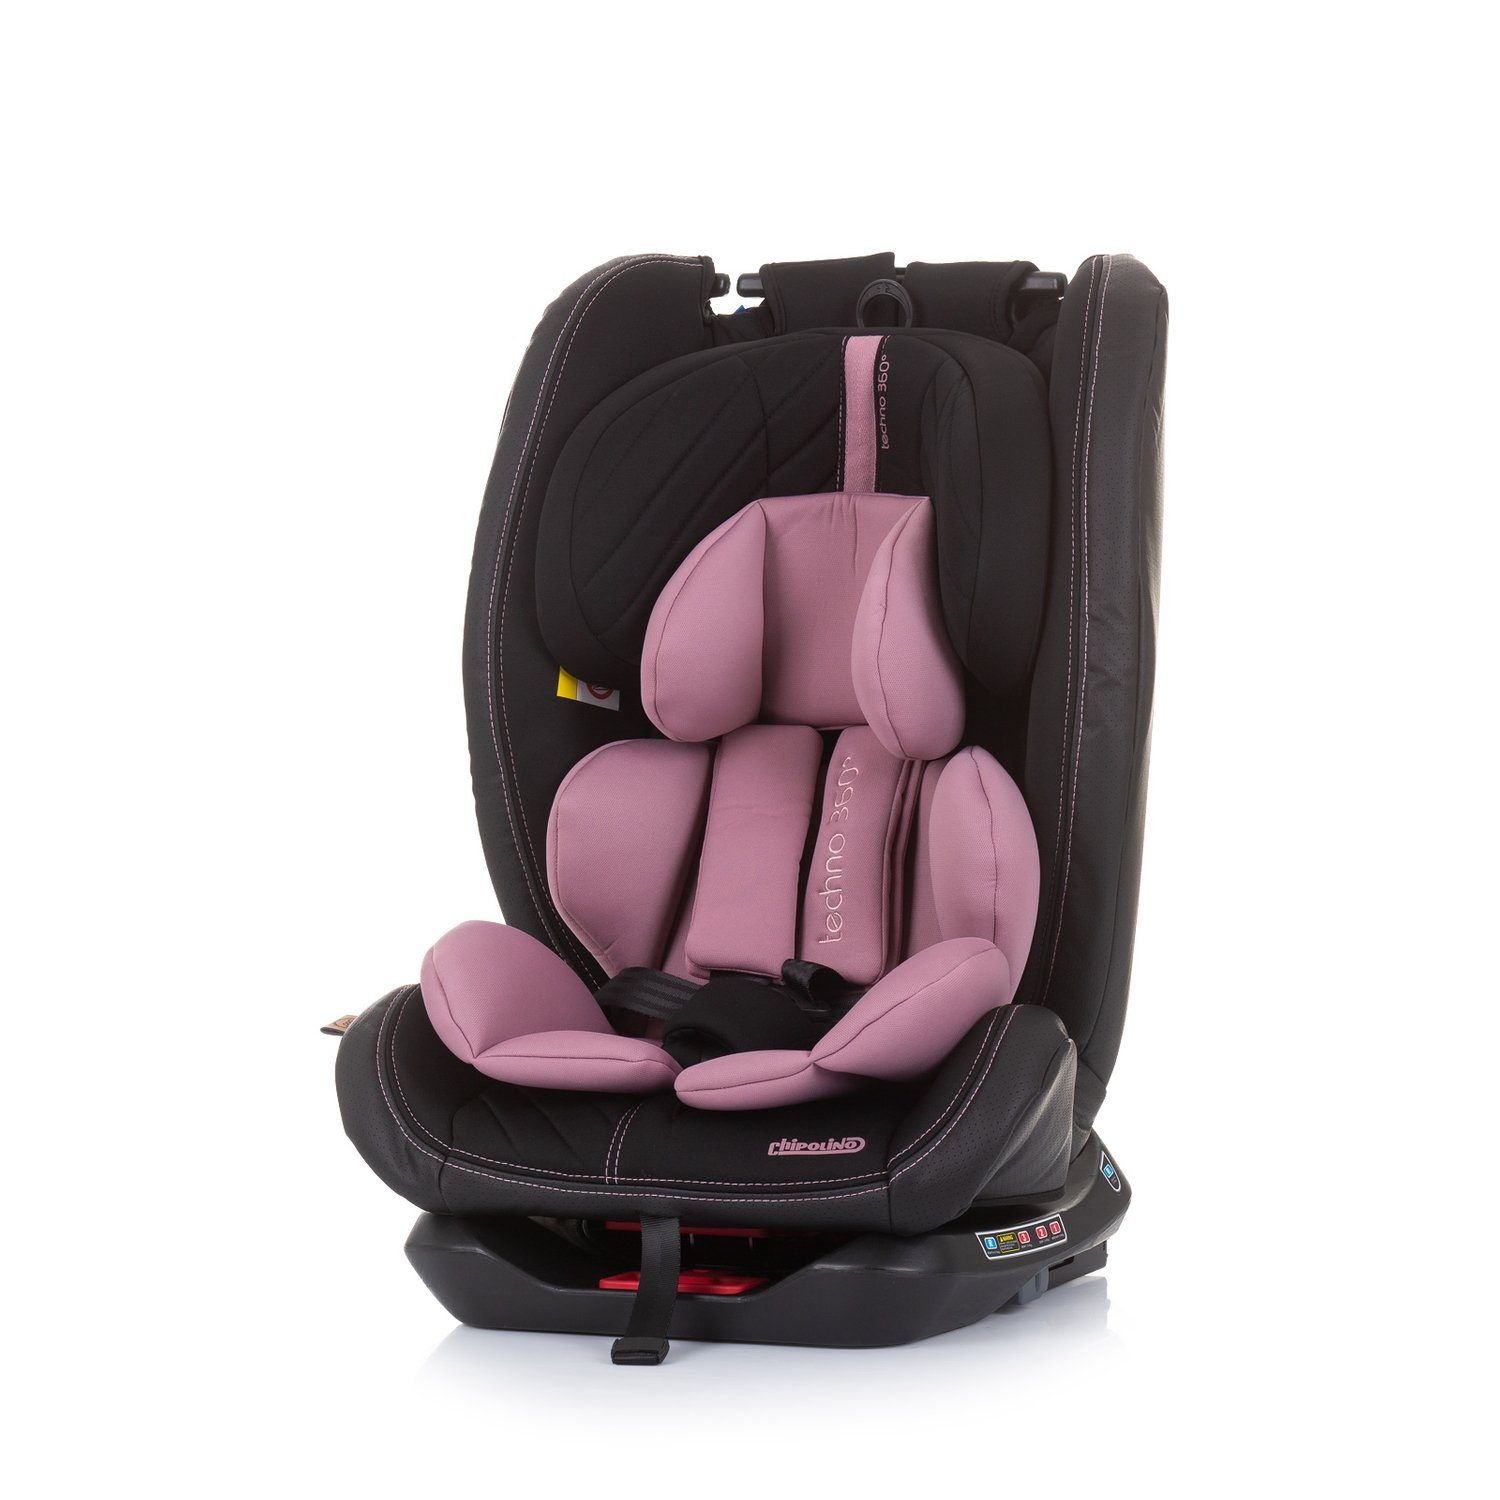 (0 kg) Isofix, Grad drehbar 360 36 Techno Chipolino Gruppe Kindersitz rosa bis: kg, 36 - Autokindersitz 0+/1/2/3,